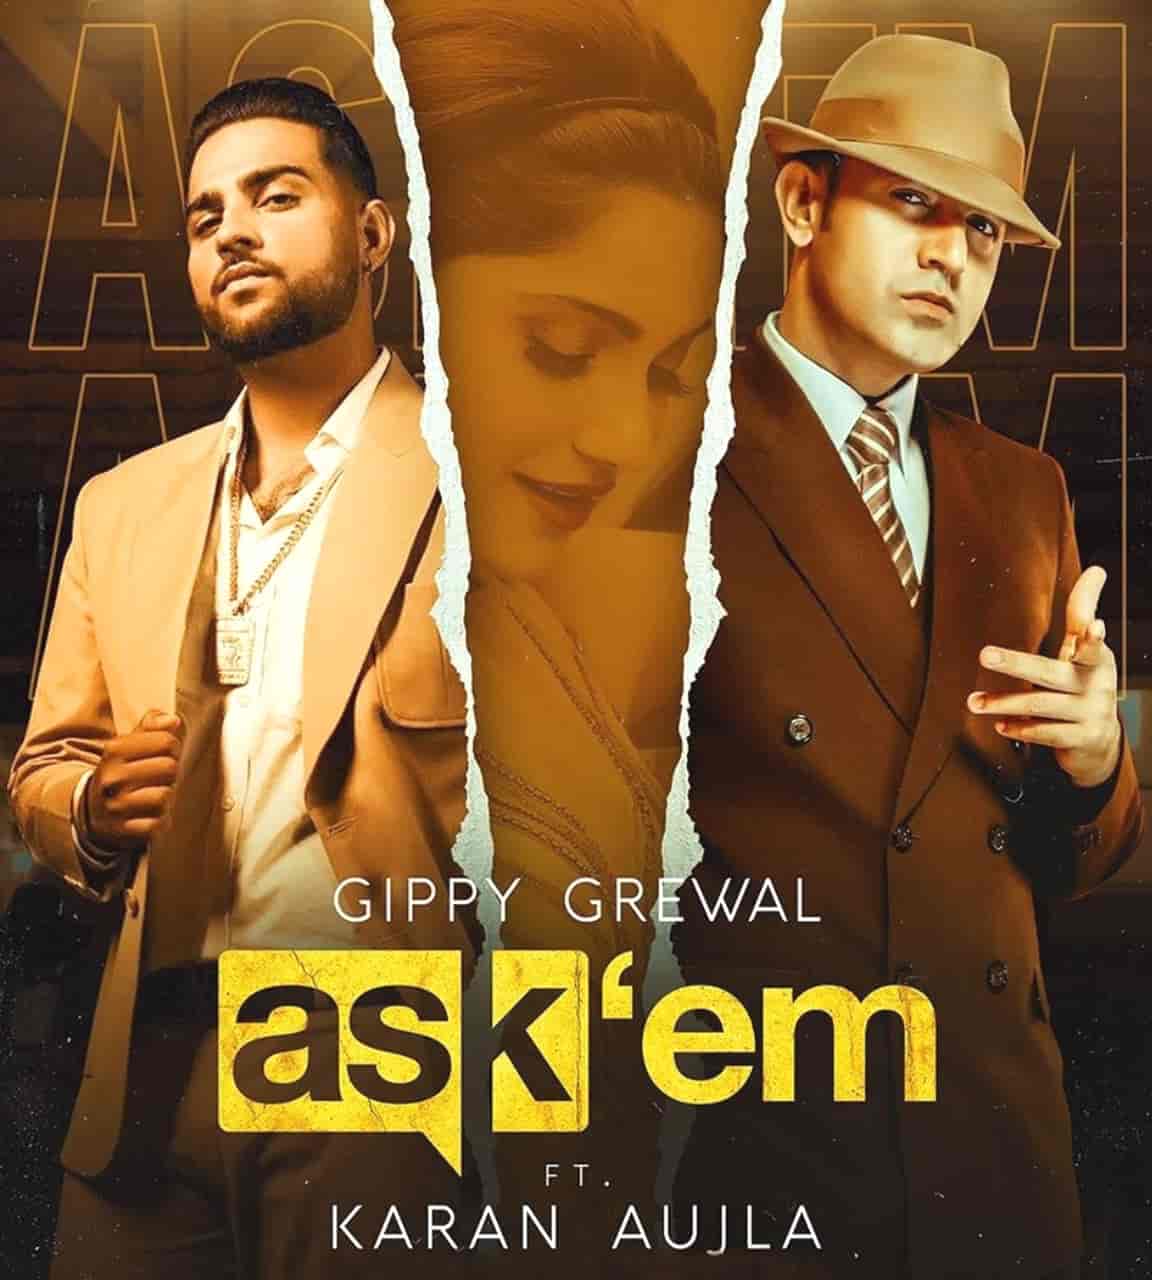 Ask Them Punjabi Song Image Features Gippy Grewal and Karan Aujla